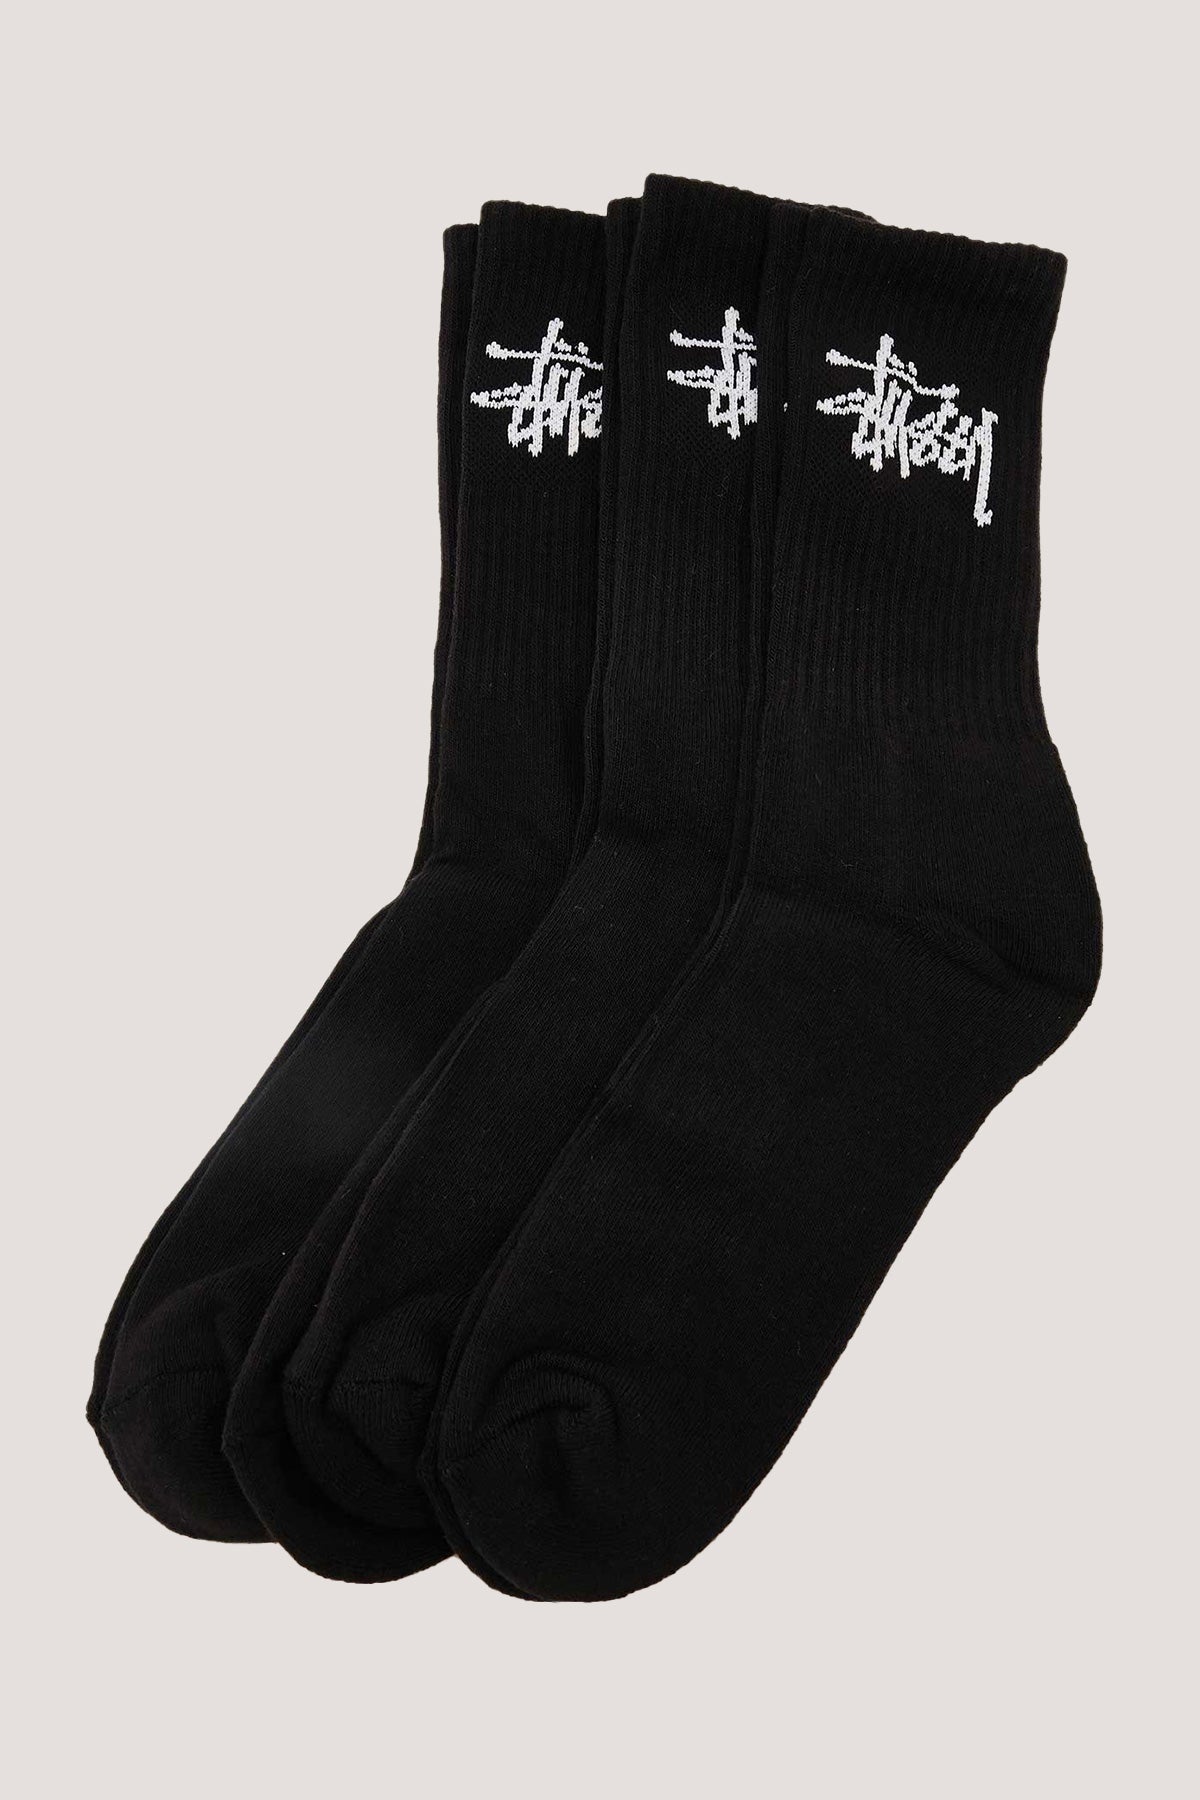 Stussy Graffiti Crew Sock 3 Pack Black – Universal Store